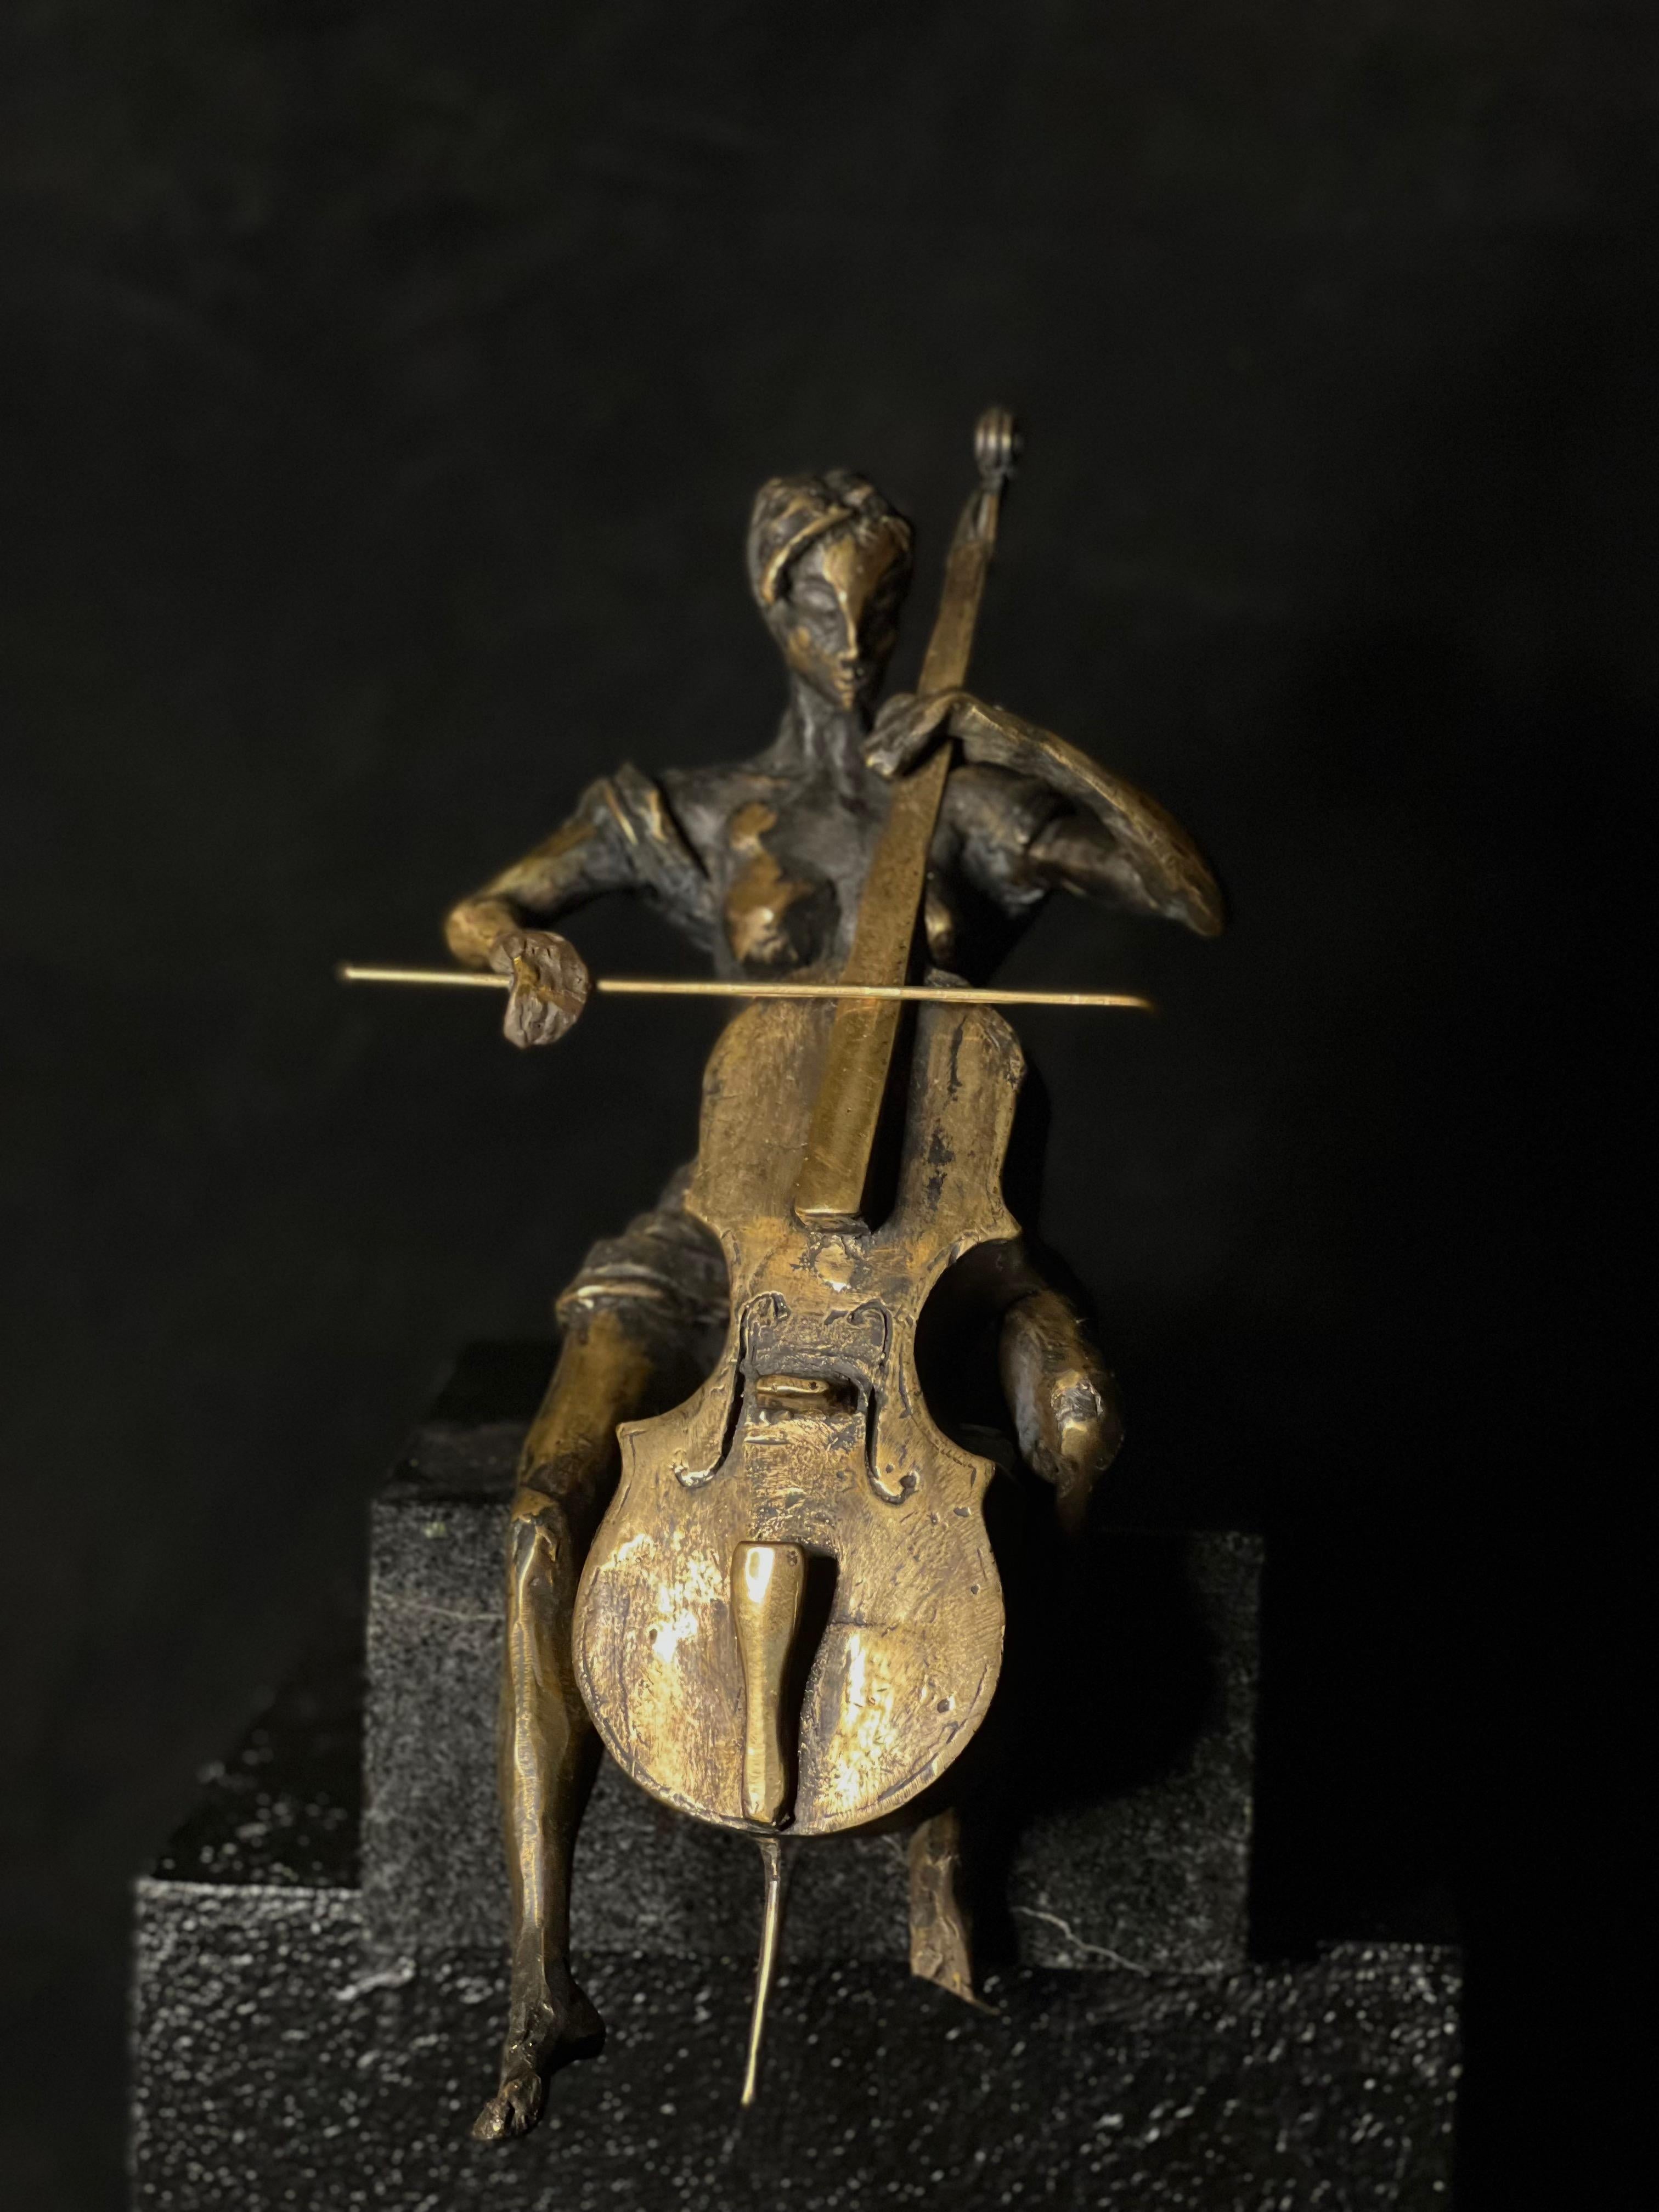 Le joueur de Cello - sculpture en bronze - Sculpture de Tauno Kangro